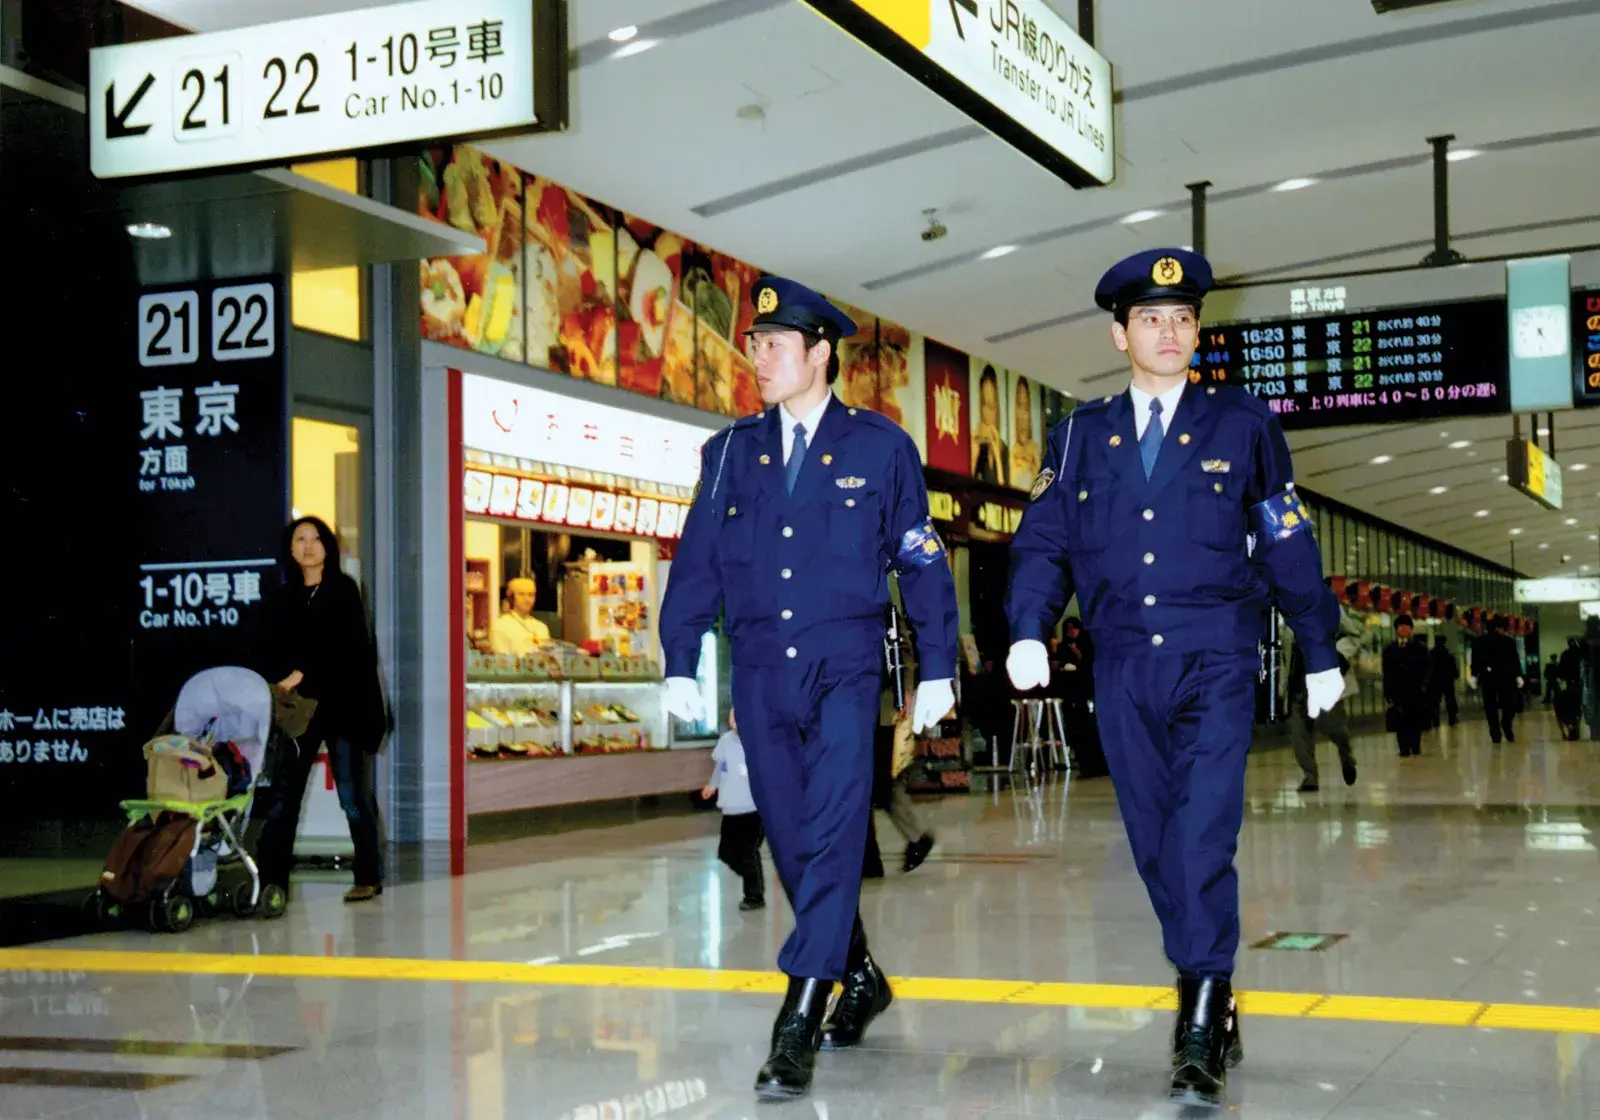 Officers-train-station-Tokyo-Metropolitan-Police-Department